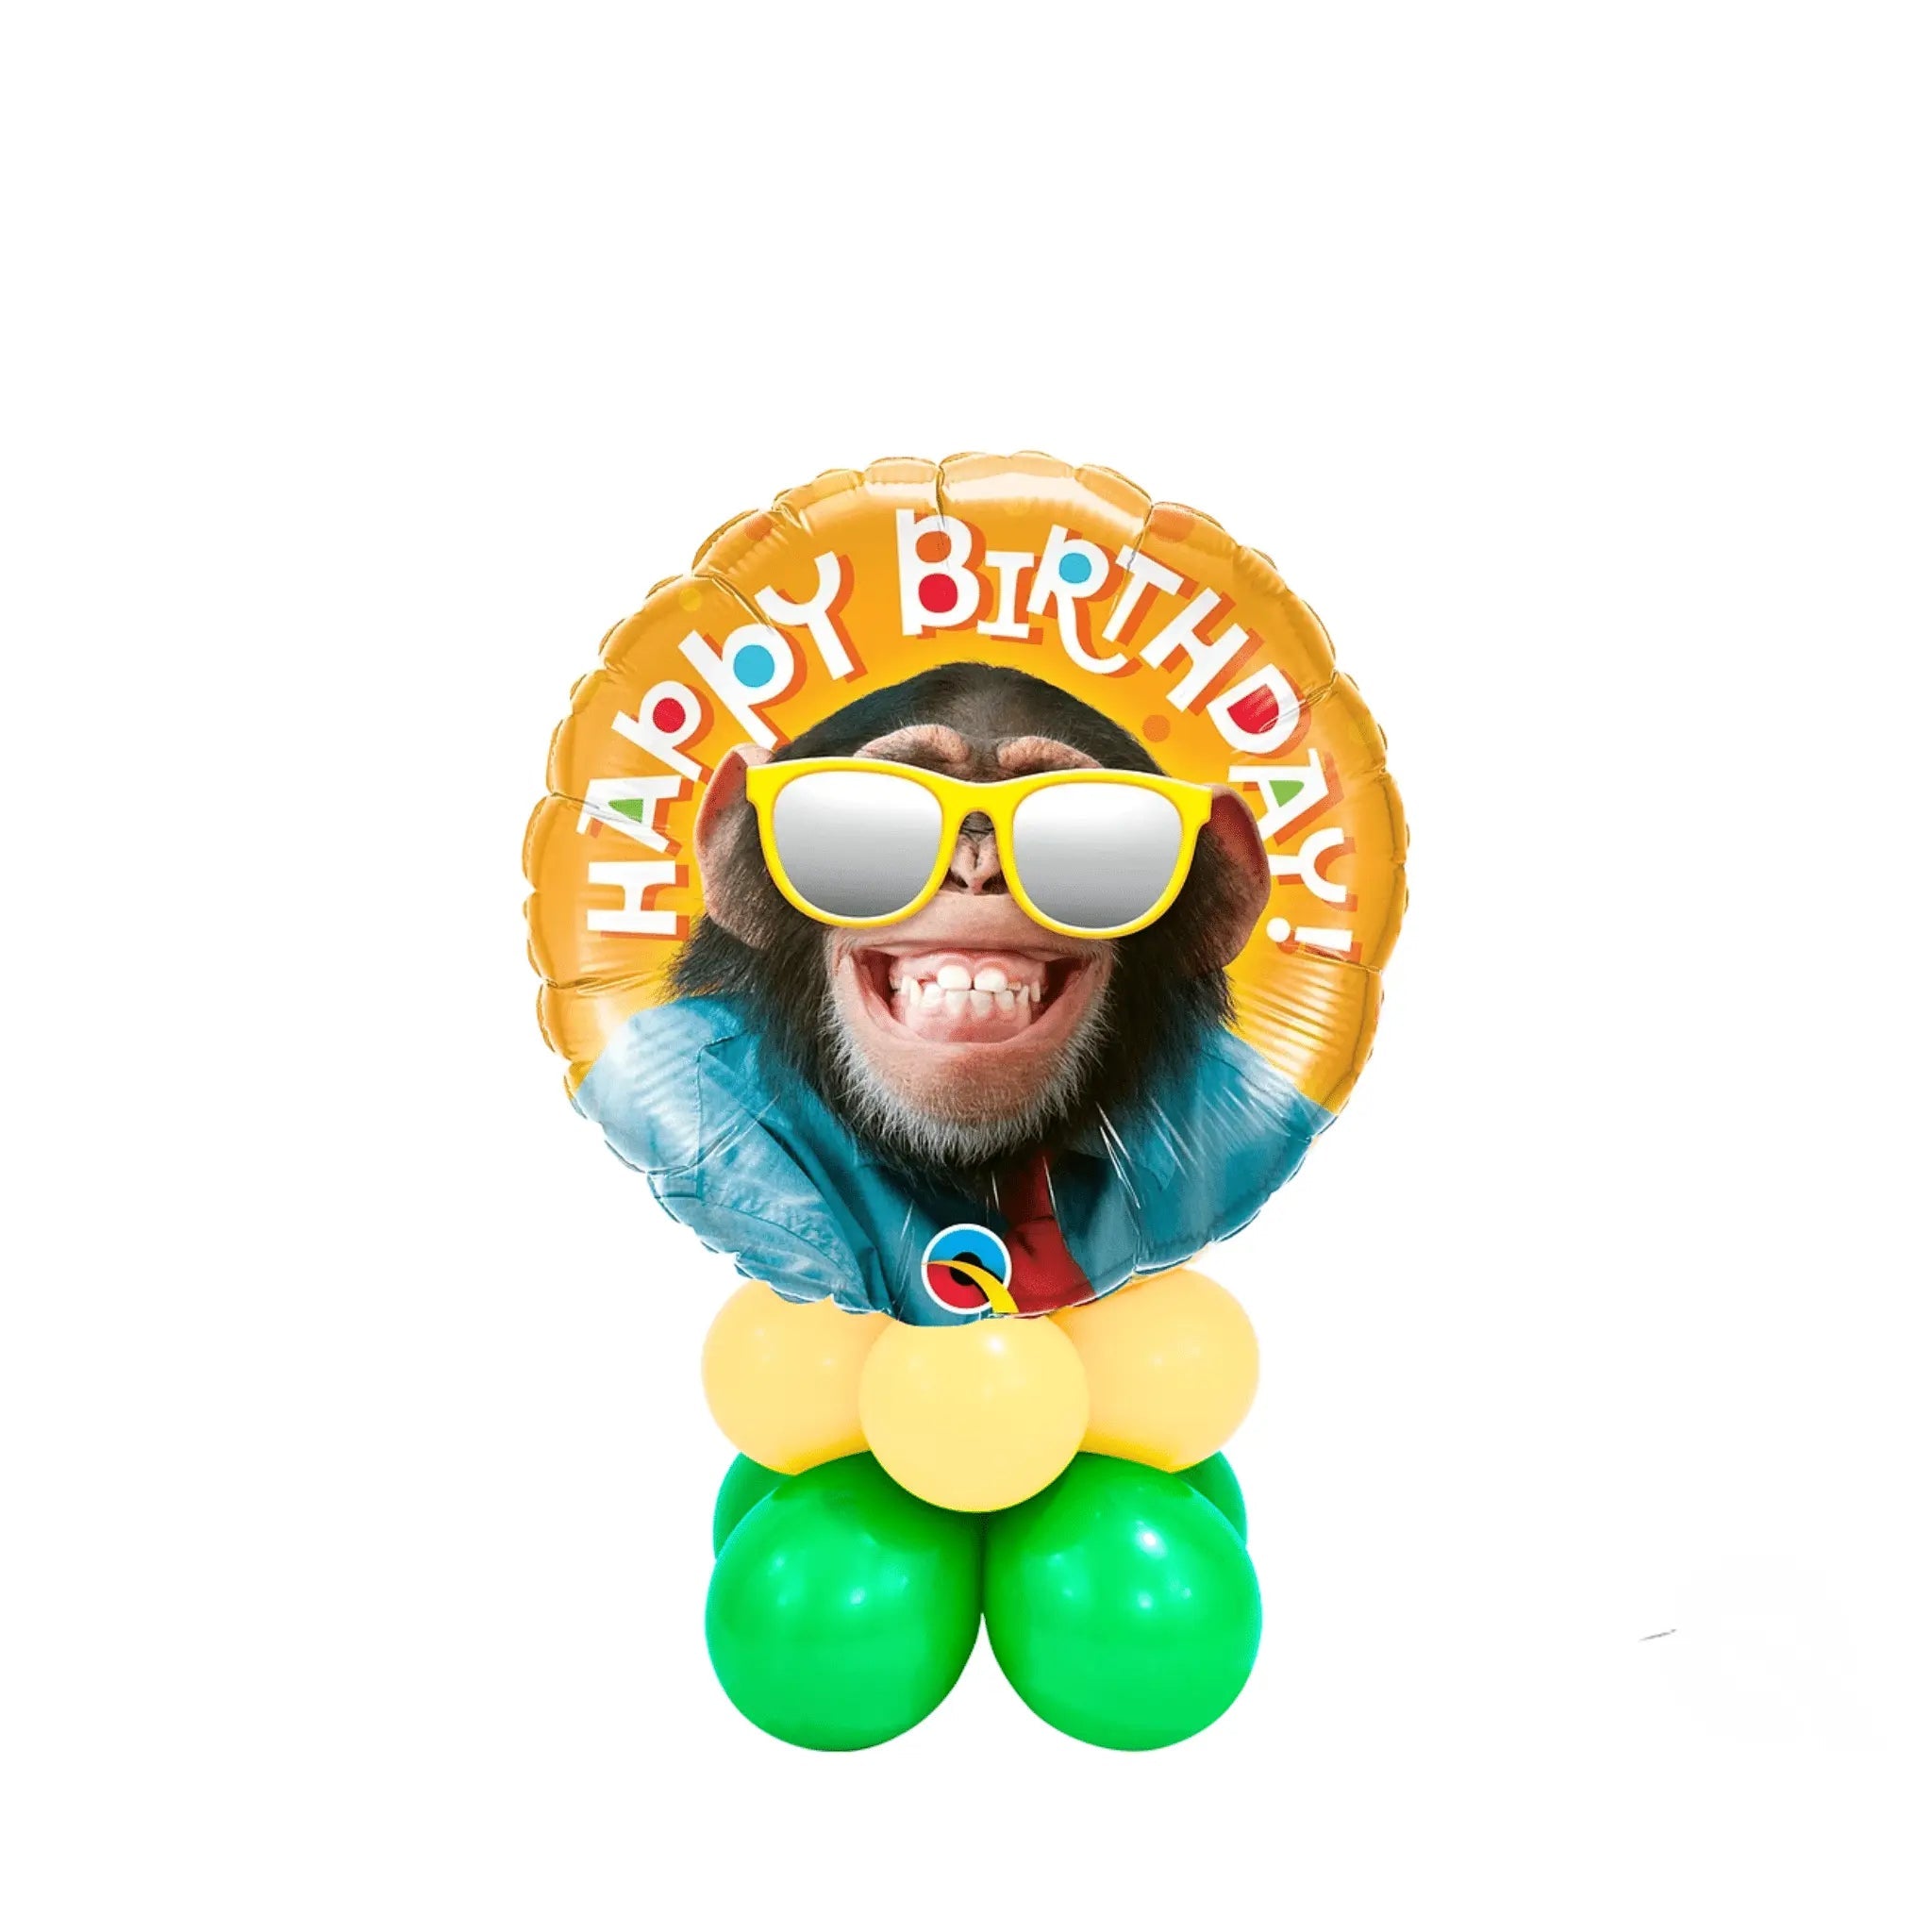 Cheeky Chimpanzee Balloon Display | The Party Hut